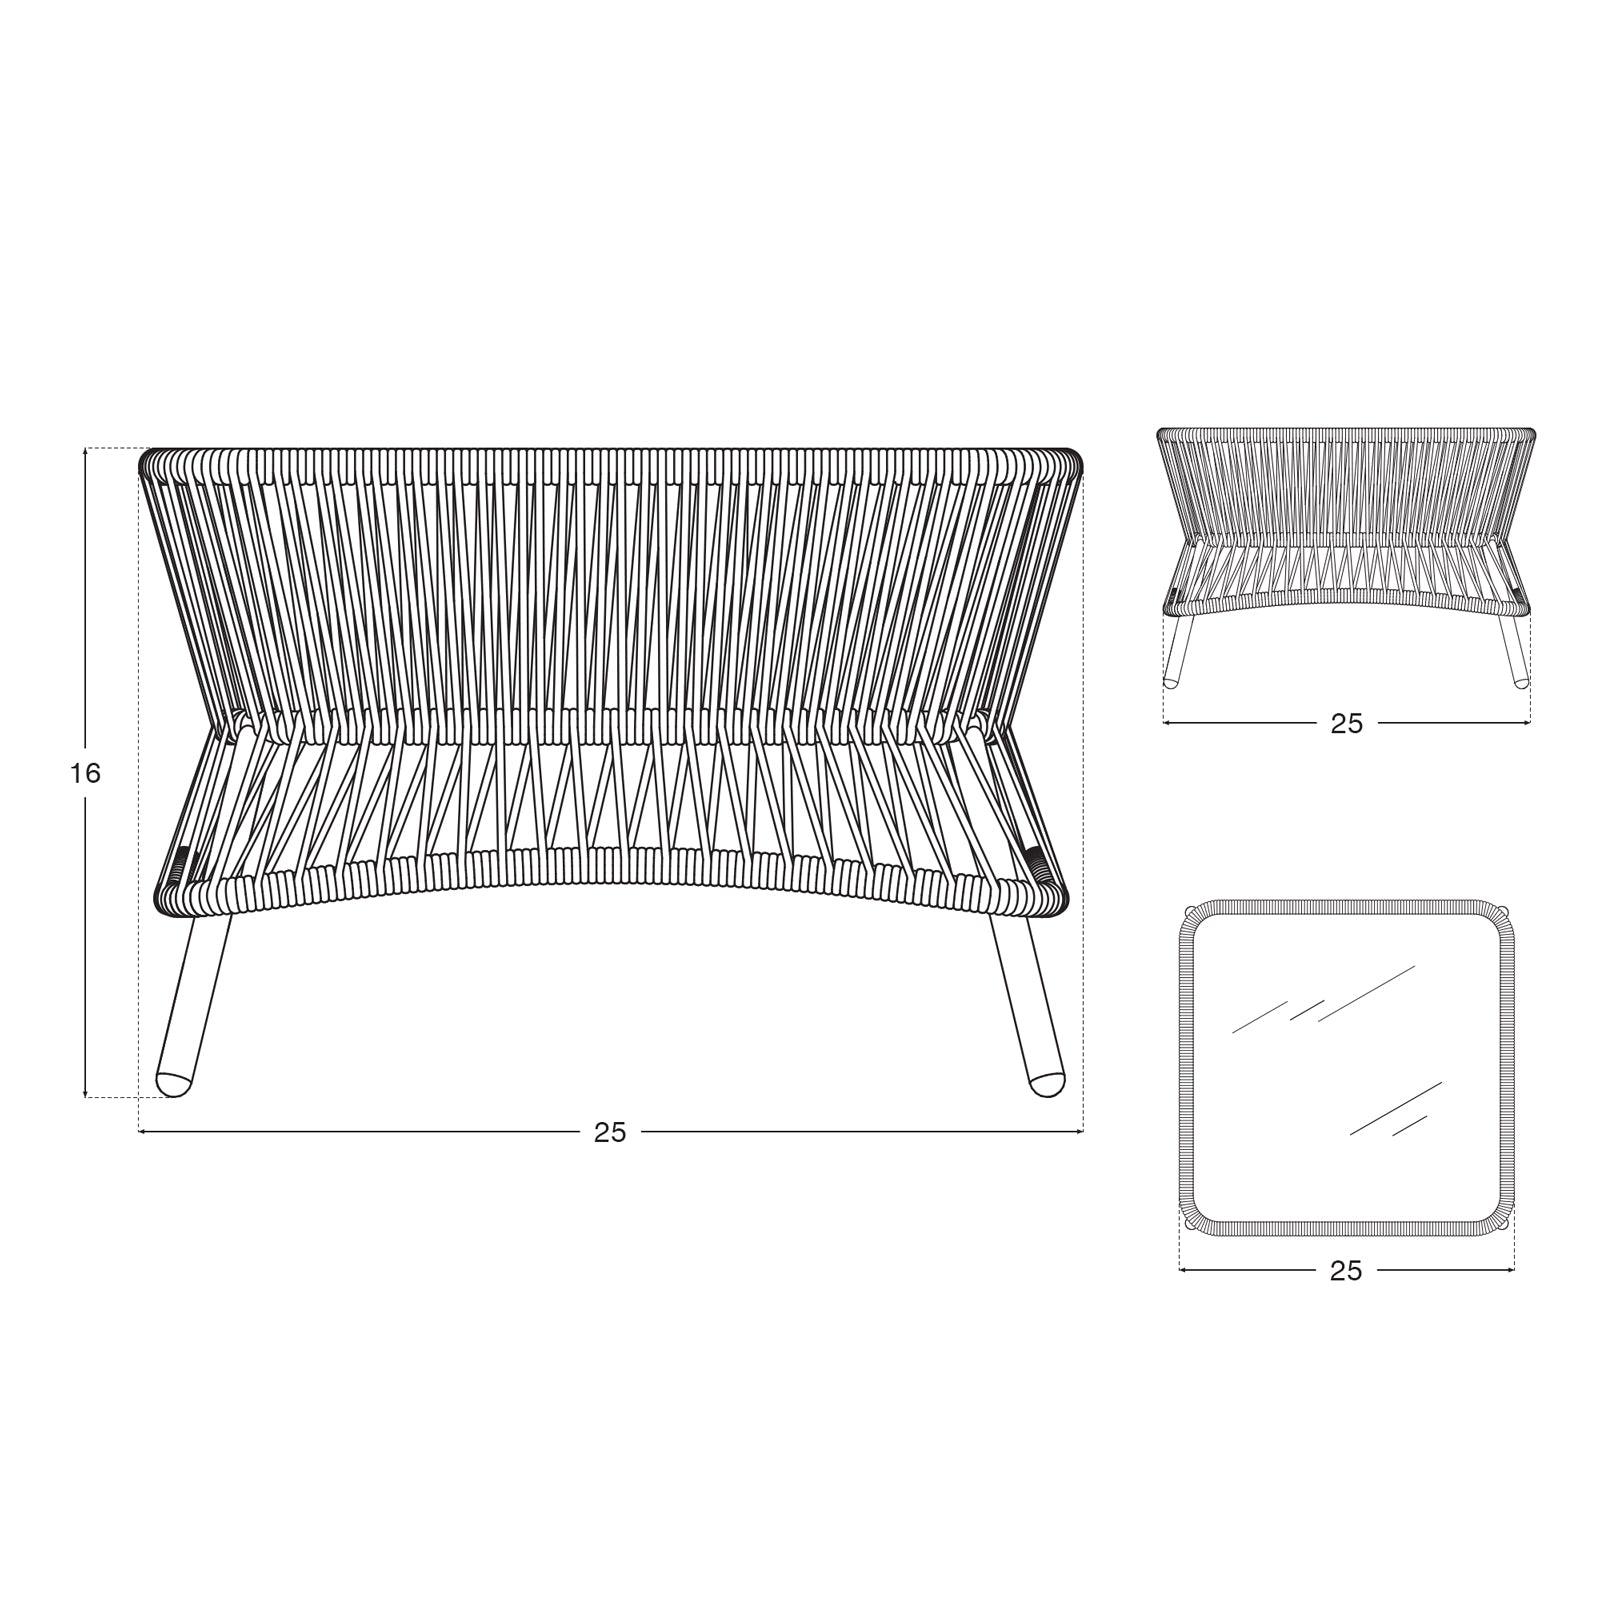 Wonder - Coffee table,grey finish, aluminum frame,Dimension information-Sunsitt Signature